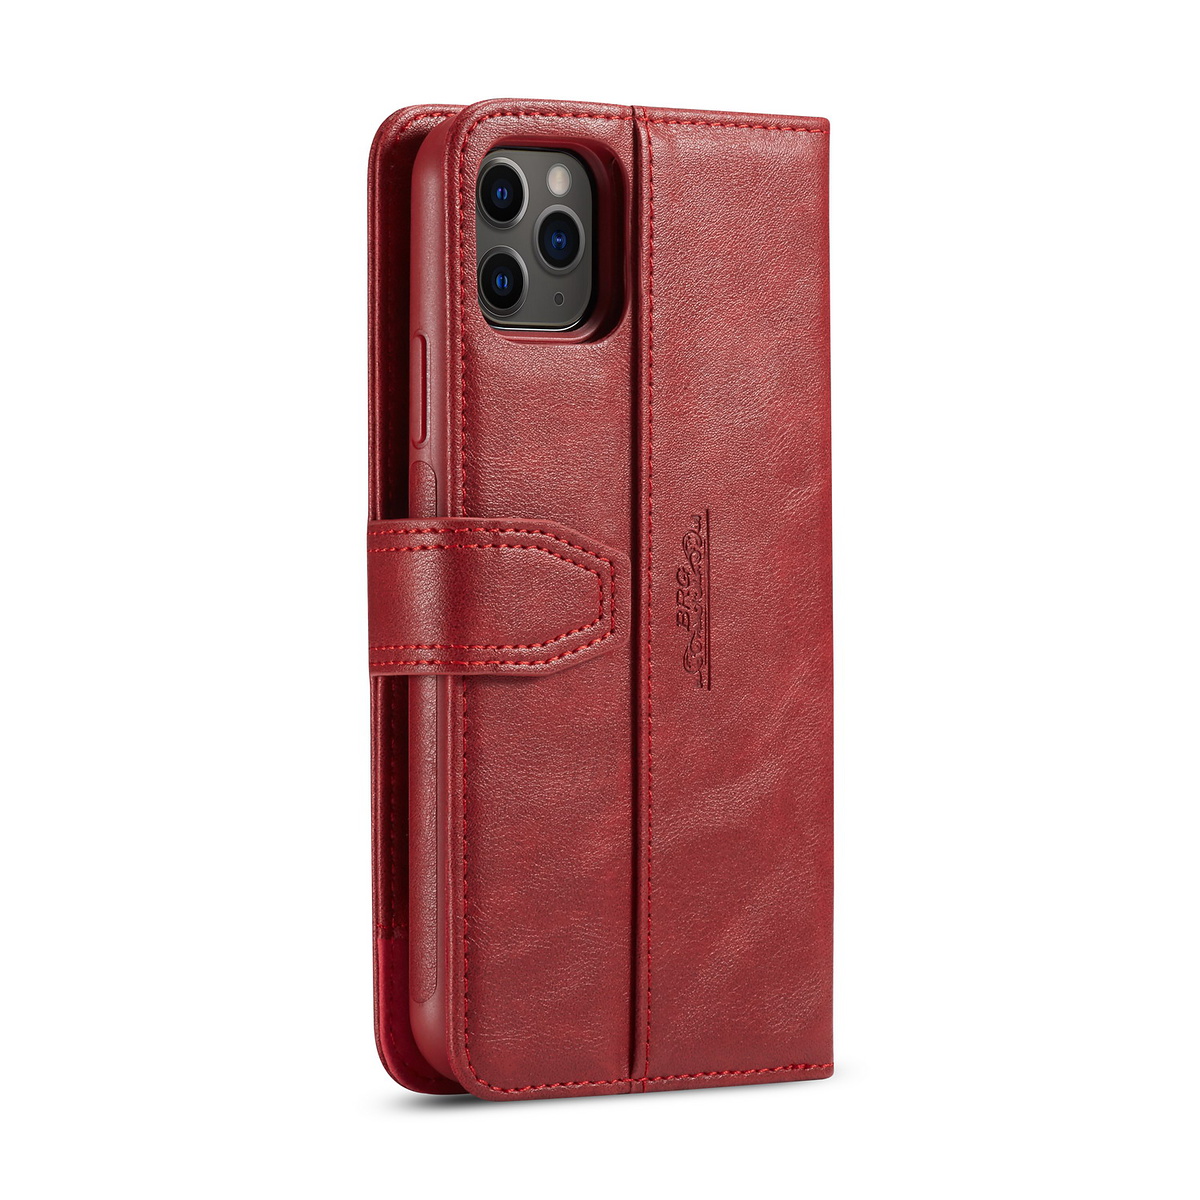 BRG Luxury plånboksfodral med ställ, iPhone 11, röd